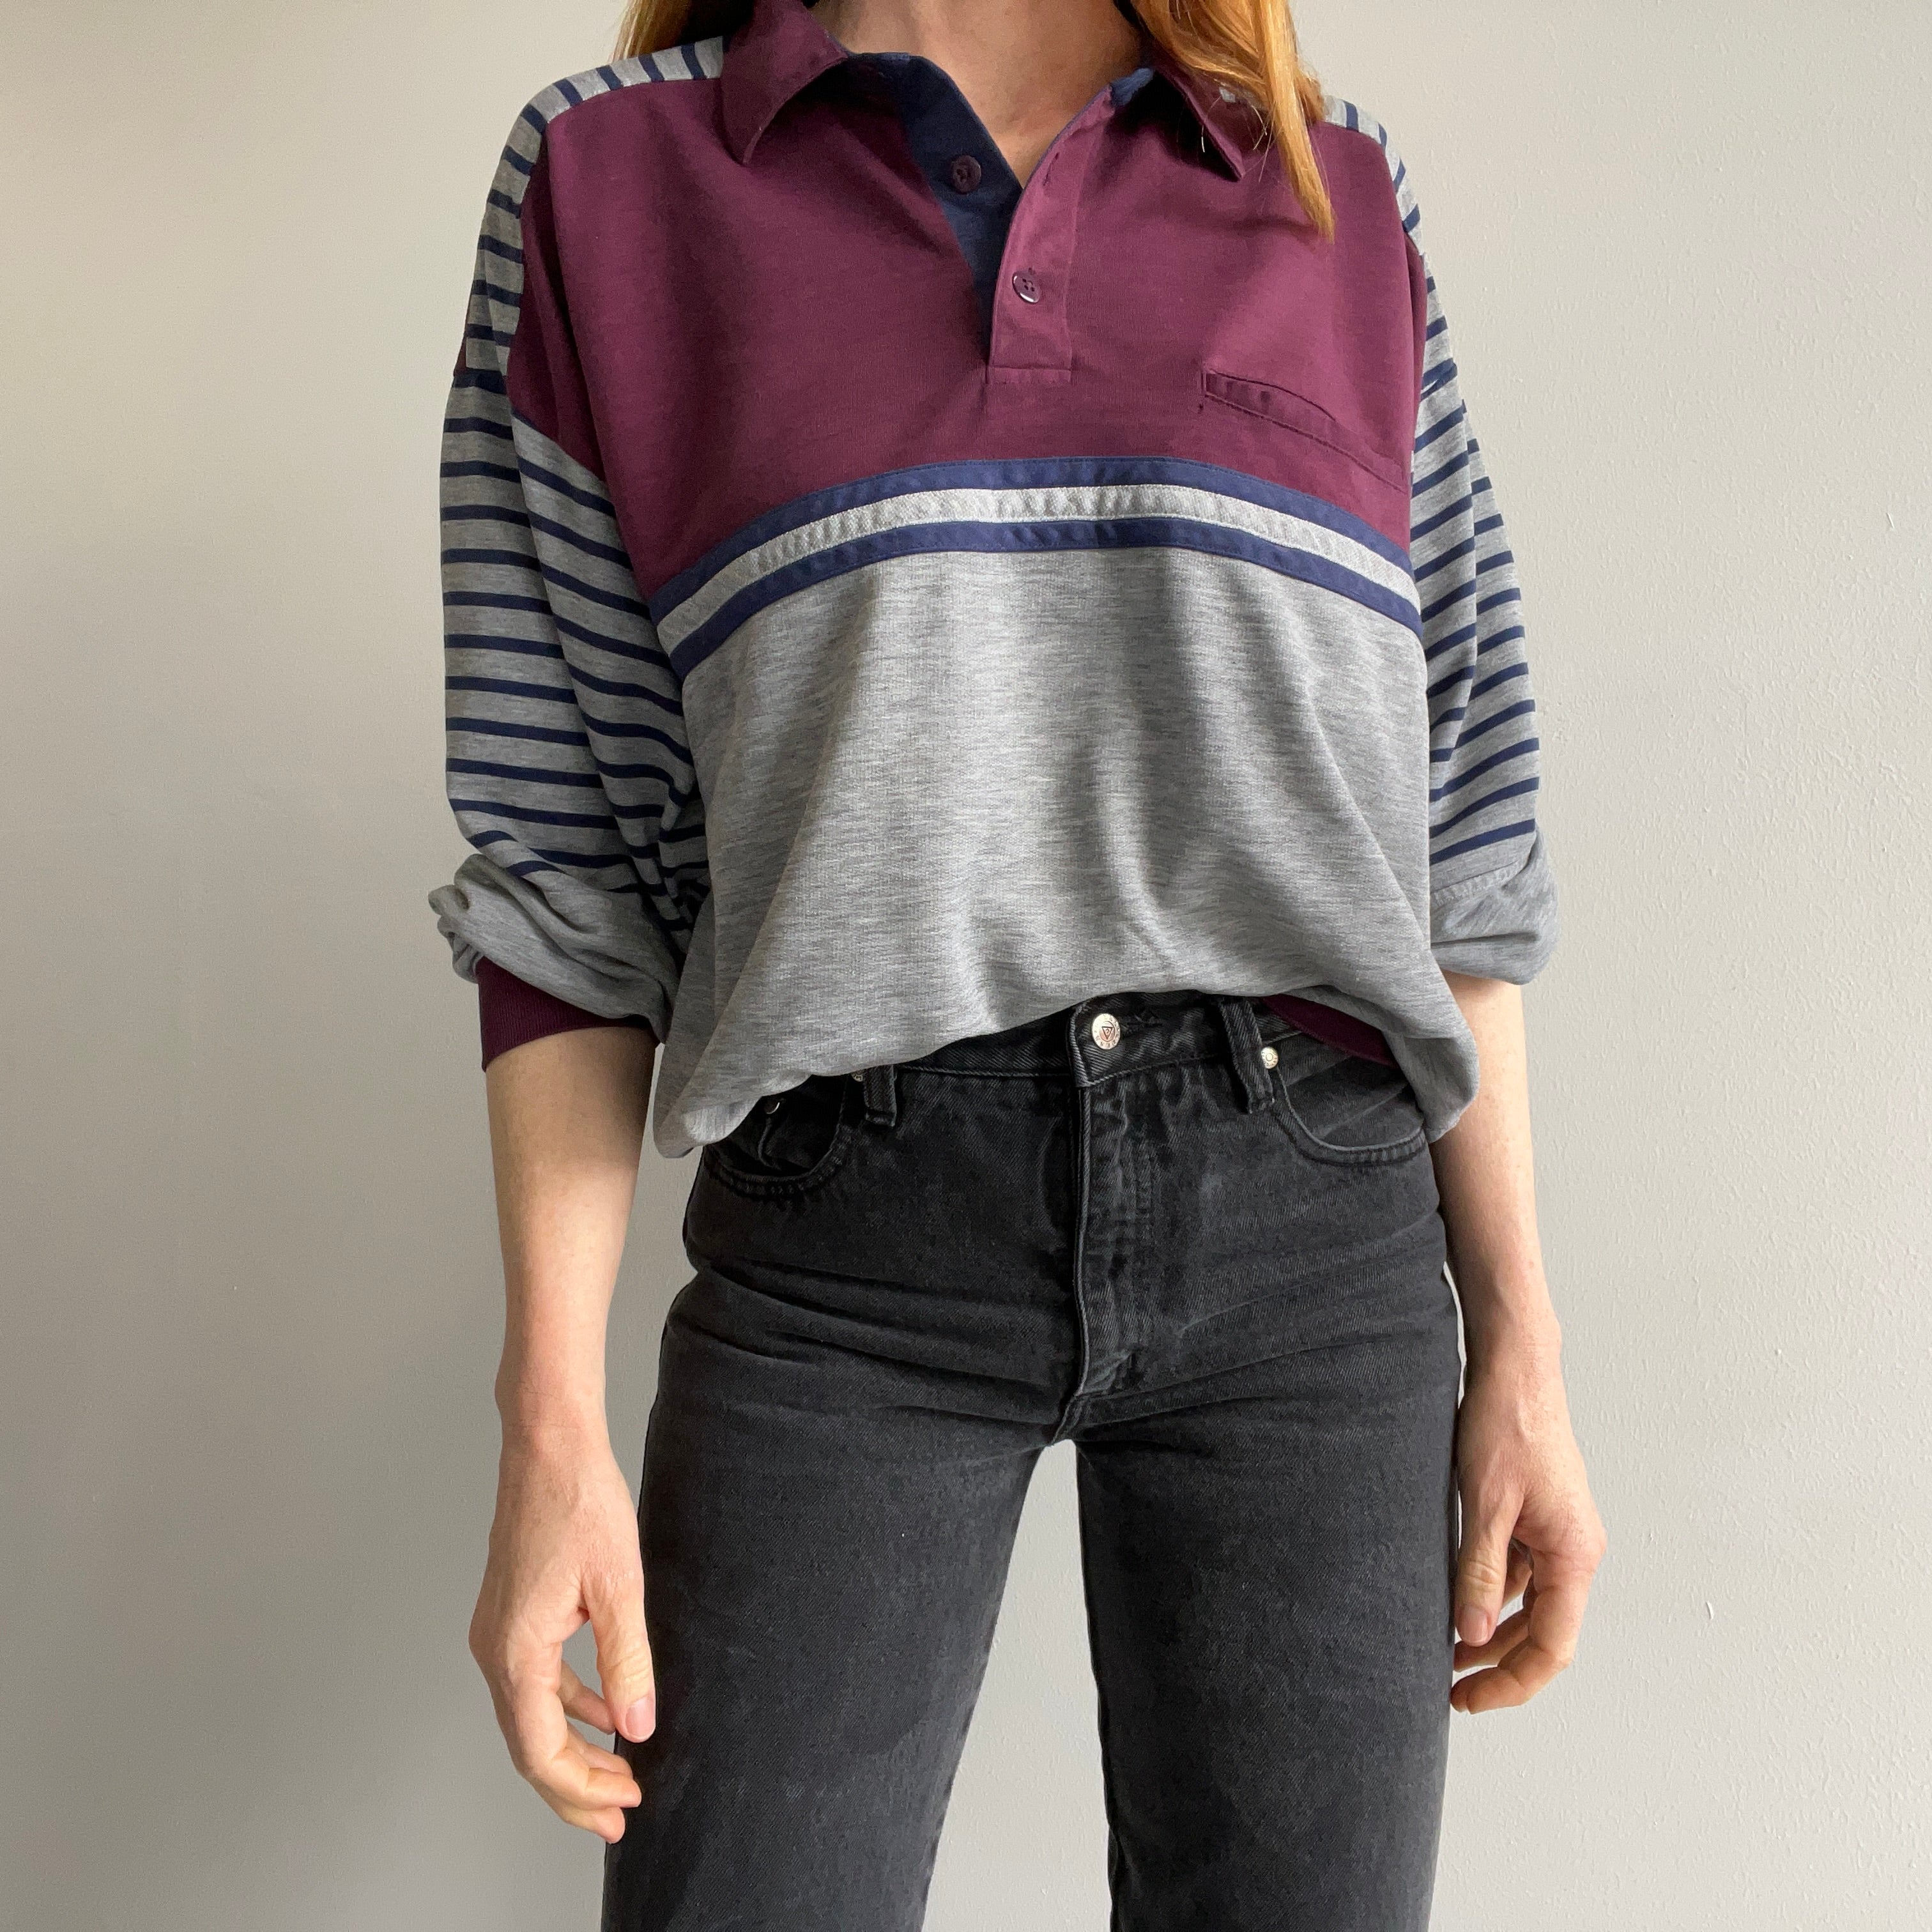 1980s Color Block Striped Lightweight Long Sleeve Shirt/Sweatshirt Polo